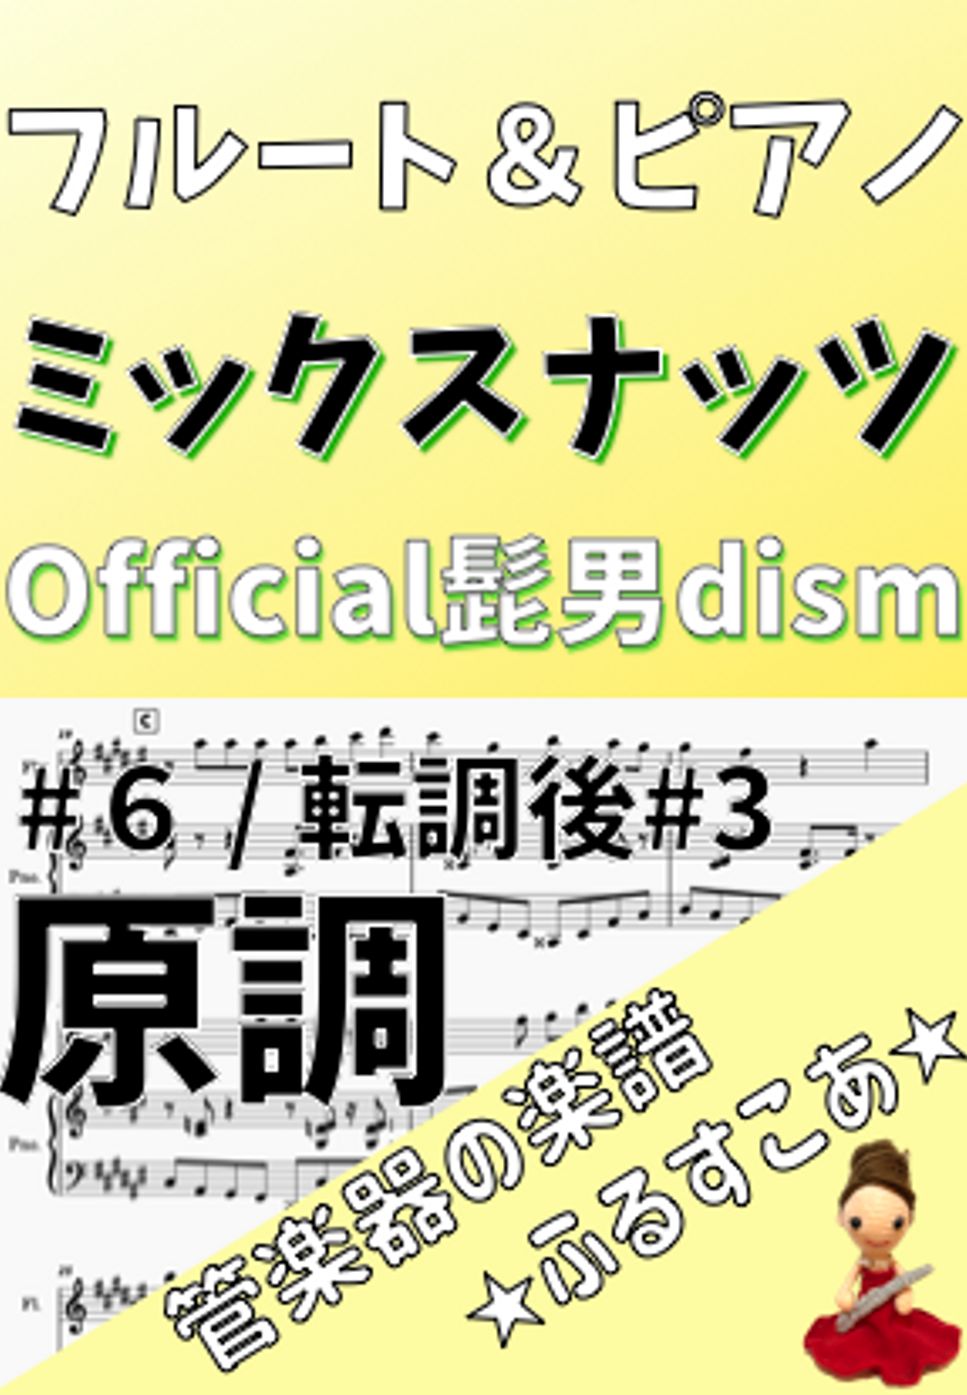 Official髭男dism - 【フルート＆ピアノ】原調ミックスナッツ（Official髭男dism） by 管楽器の楽譜★ふるすこあ